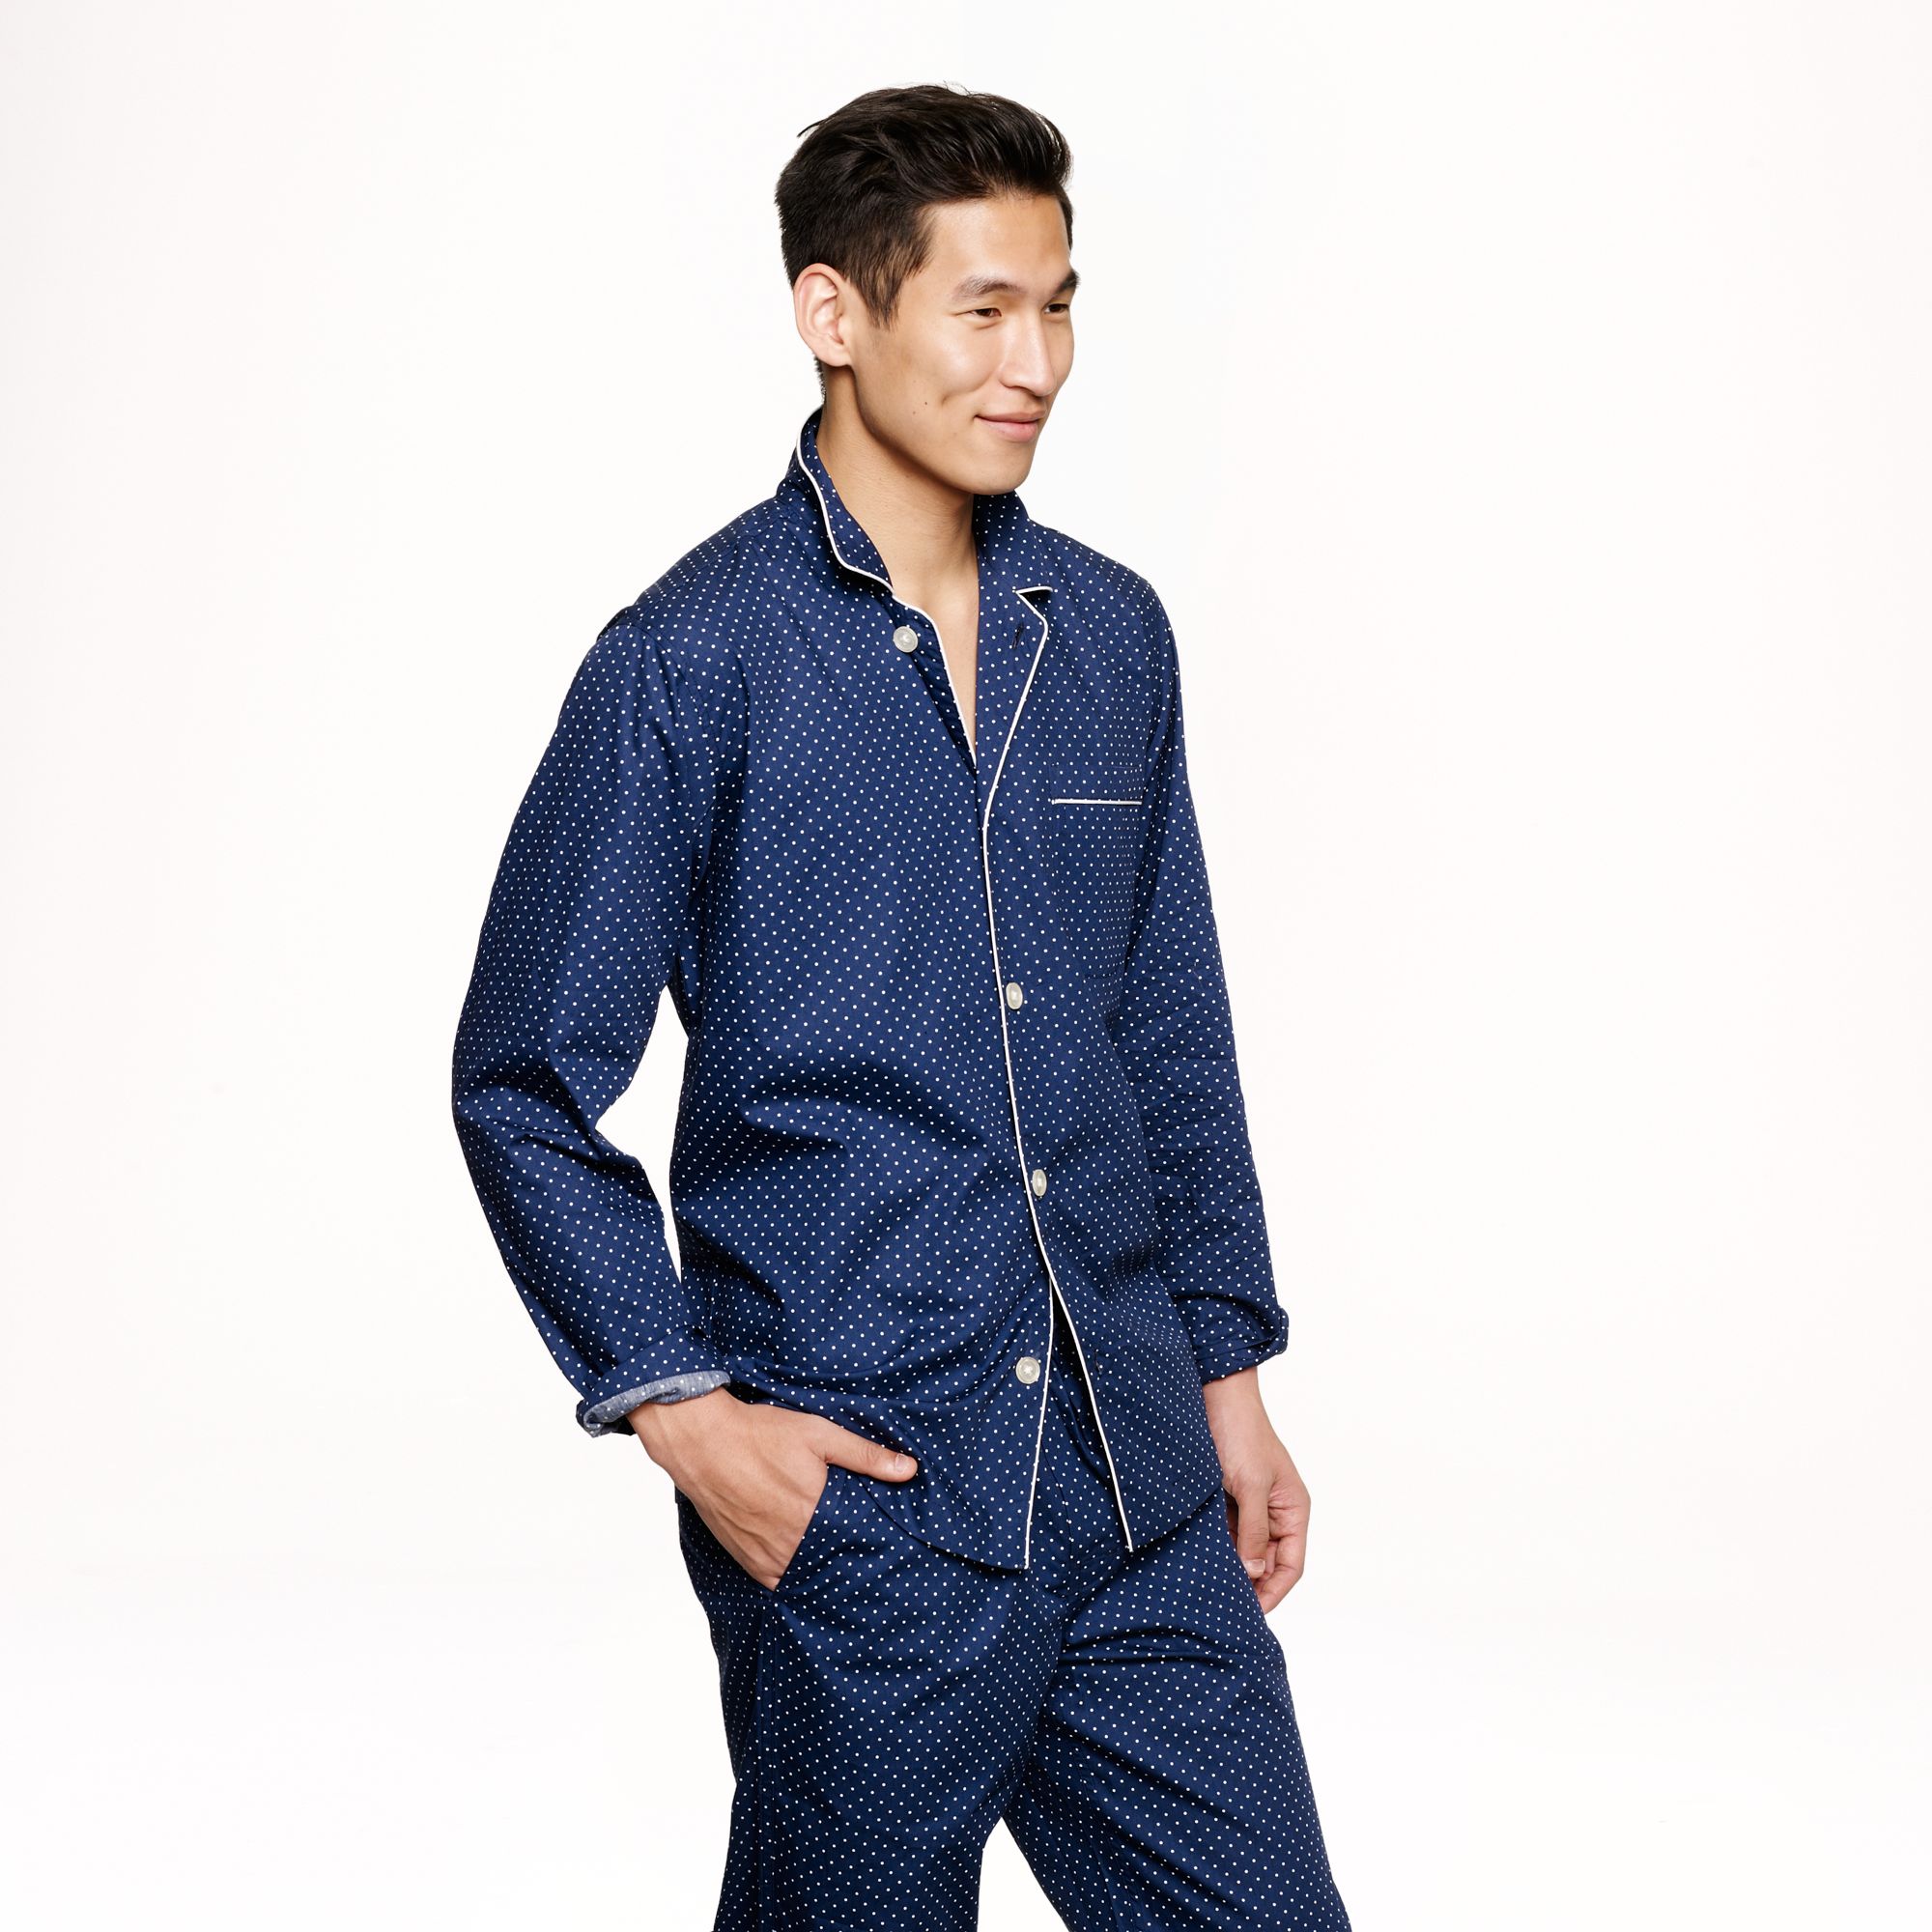 J.Crew Slim Cotton Poplin Pajama Set in Navy Dots in Blue for Men - Lyst